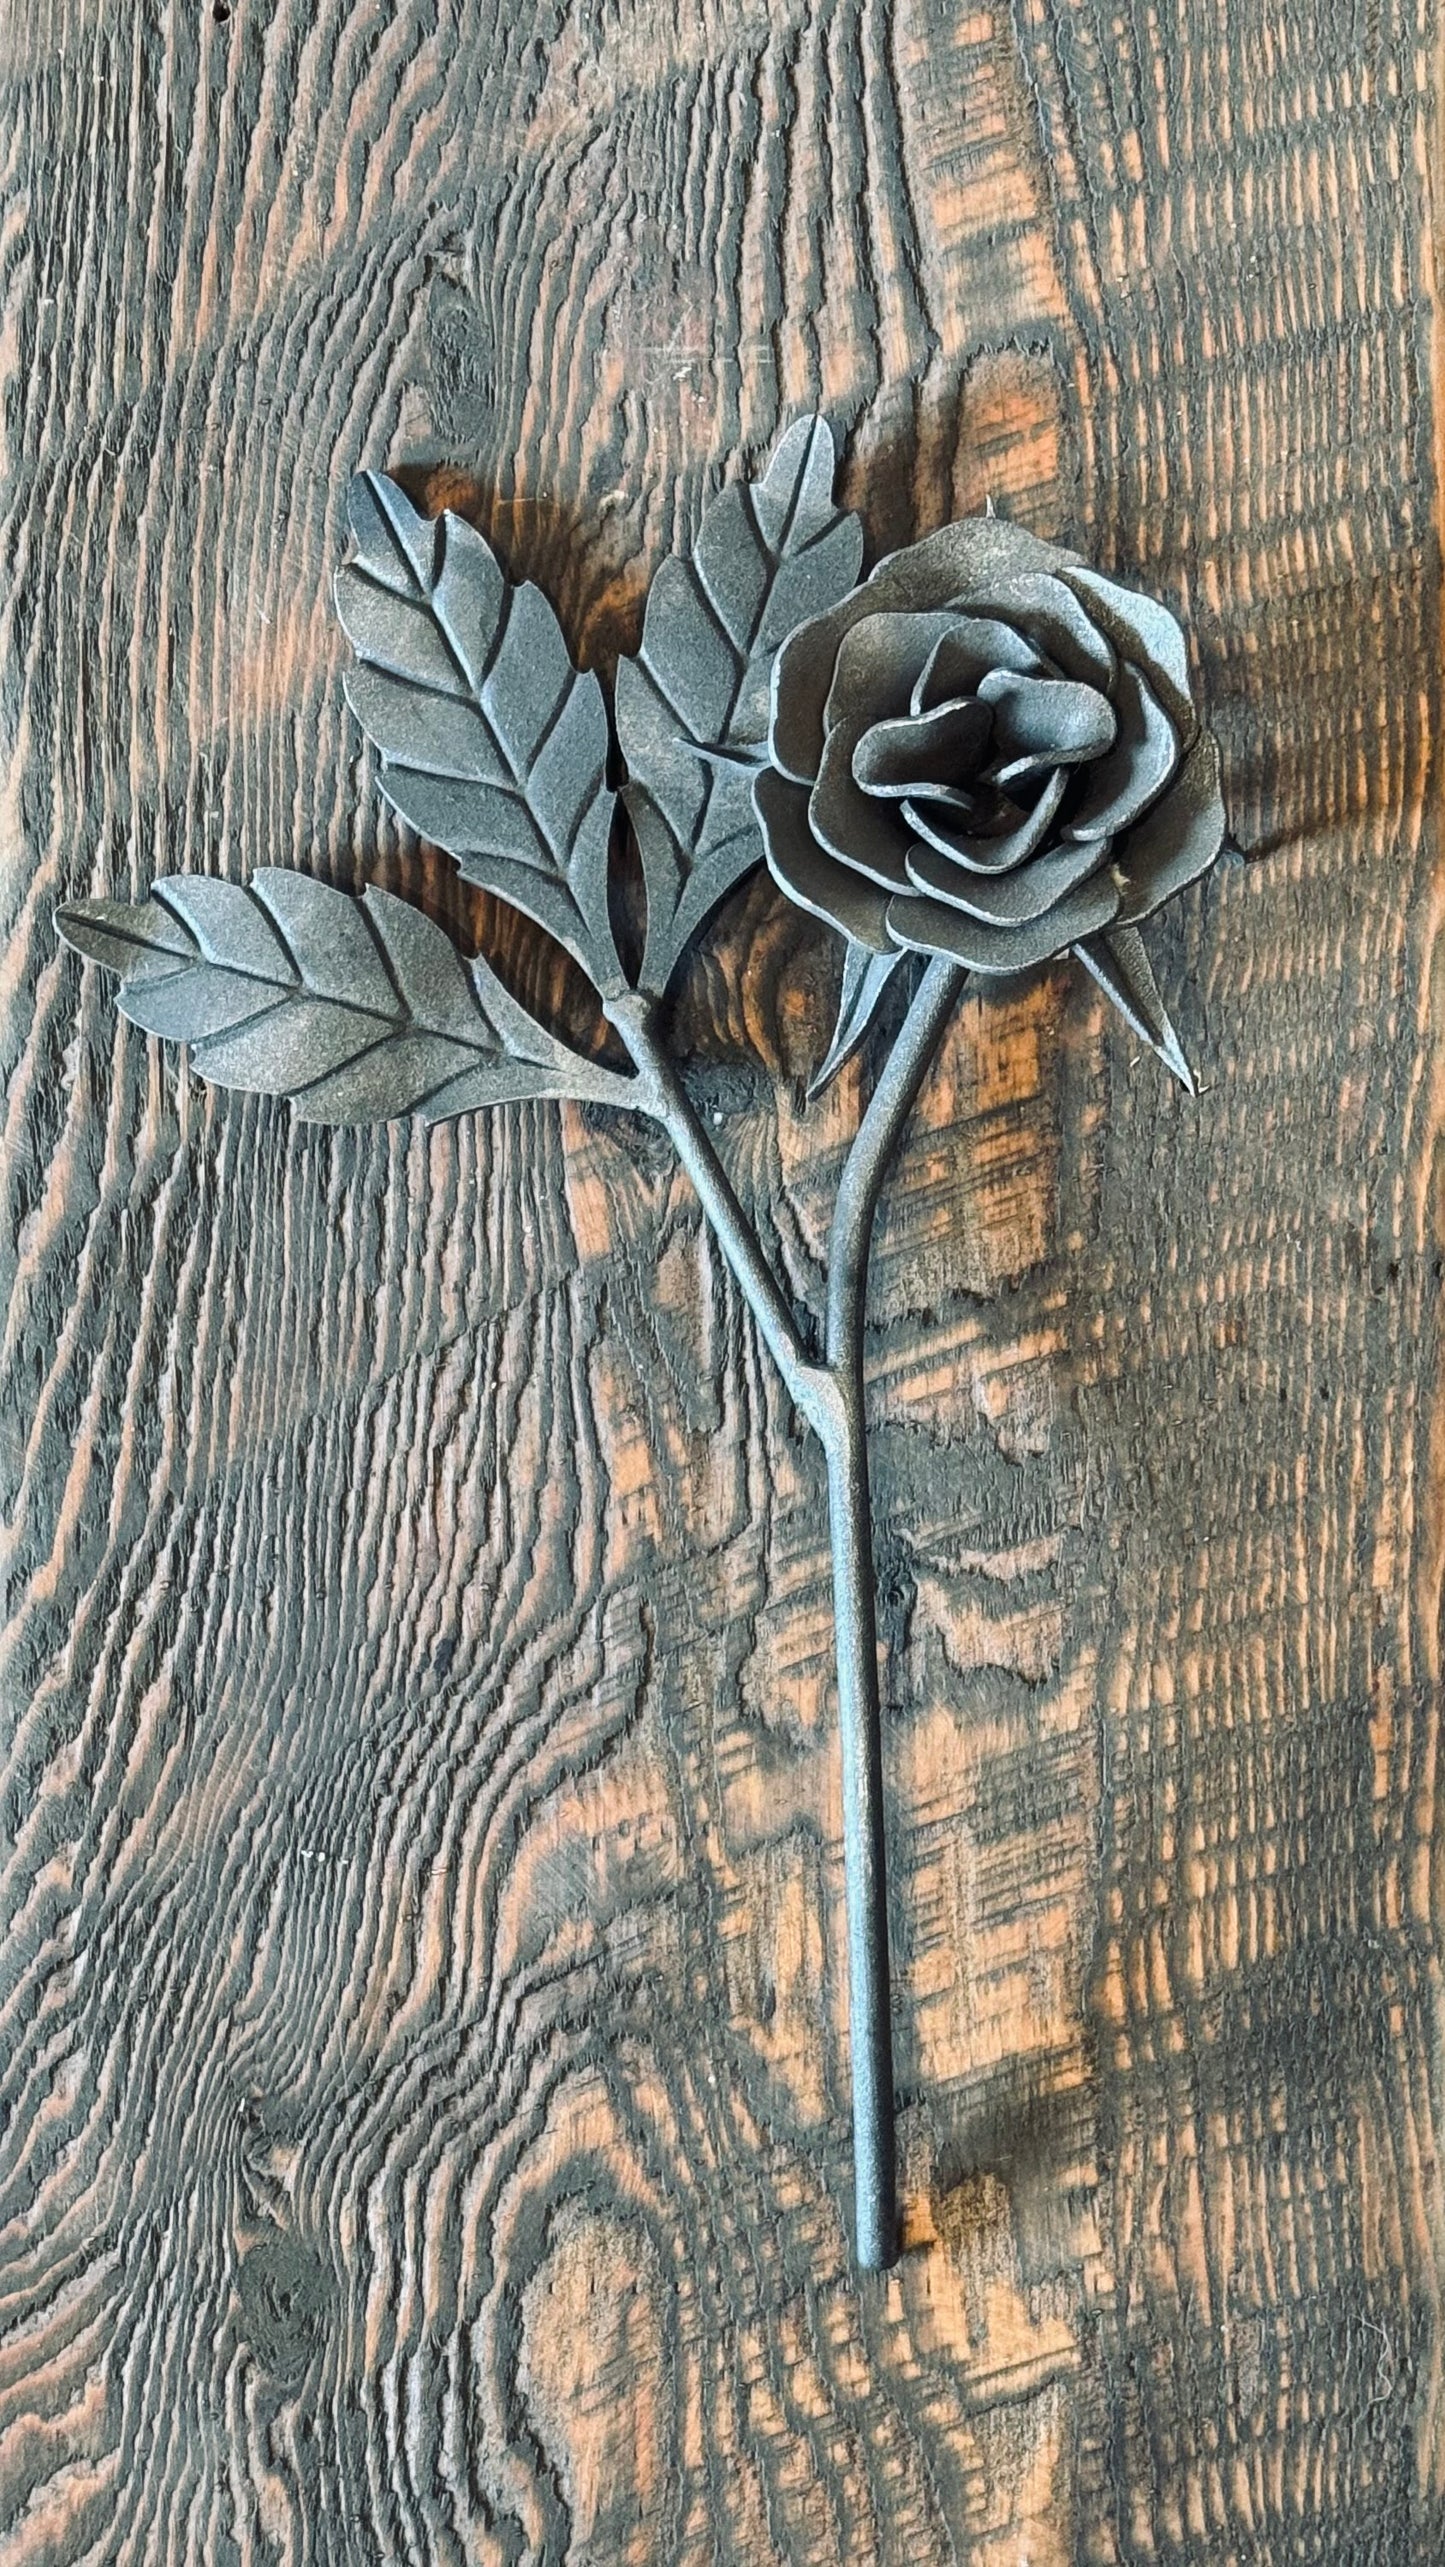 Rosa clásica de hierro de tallo largo